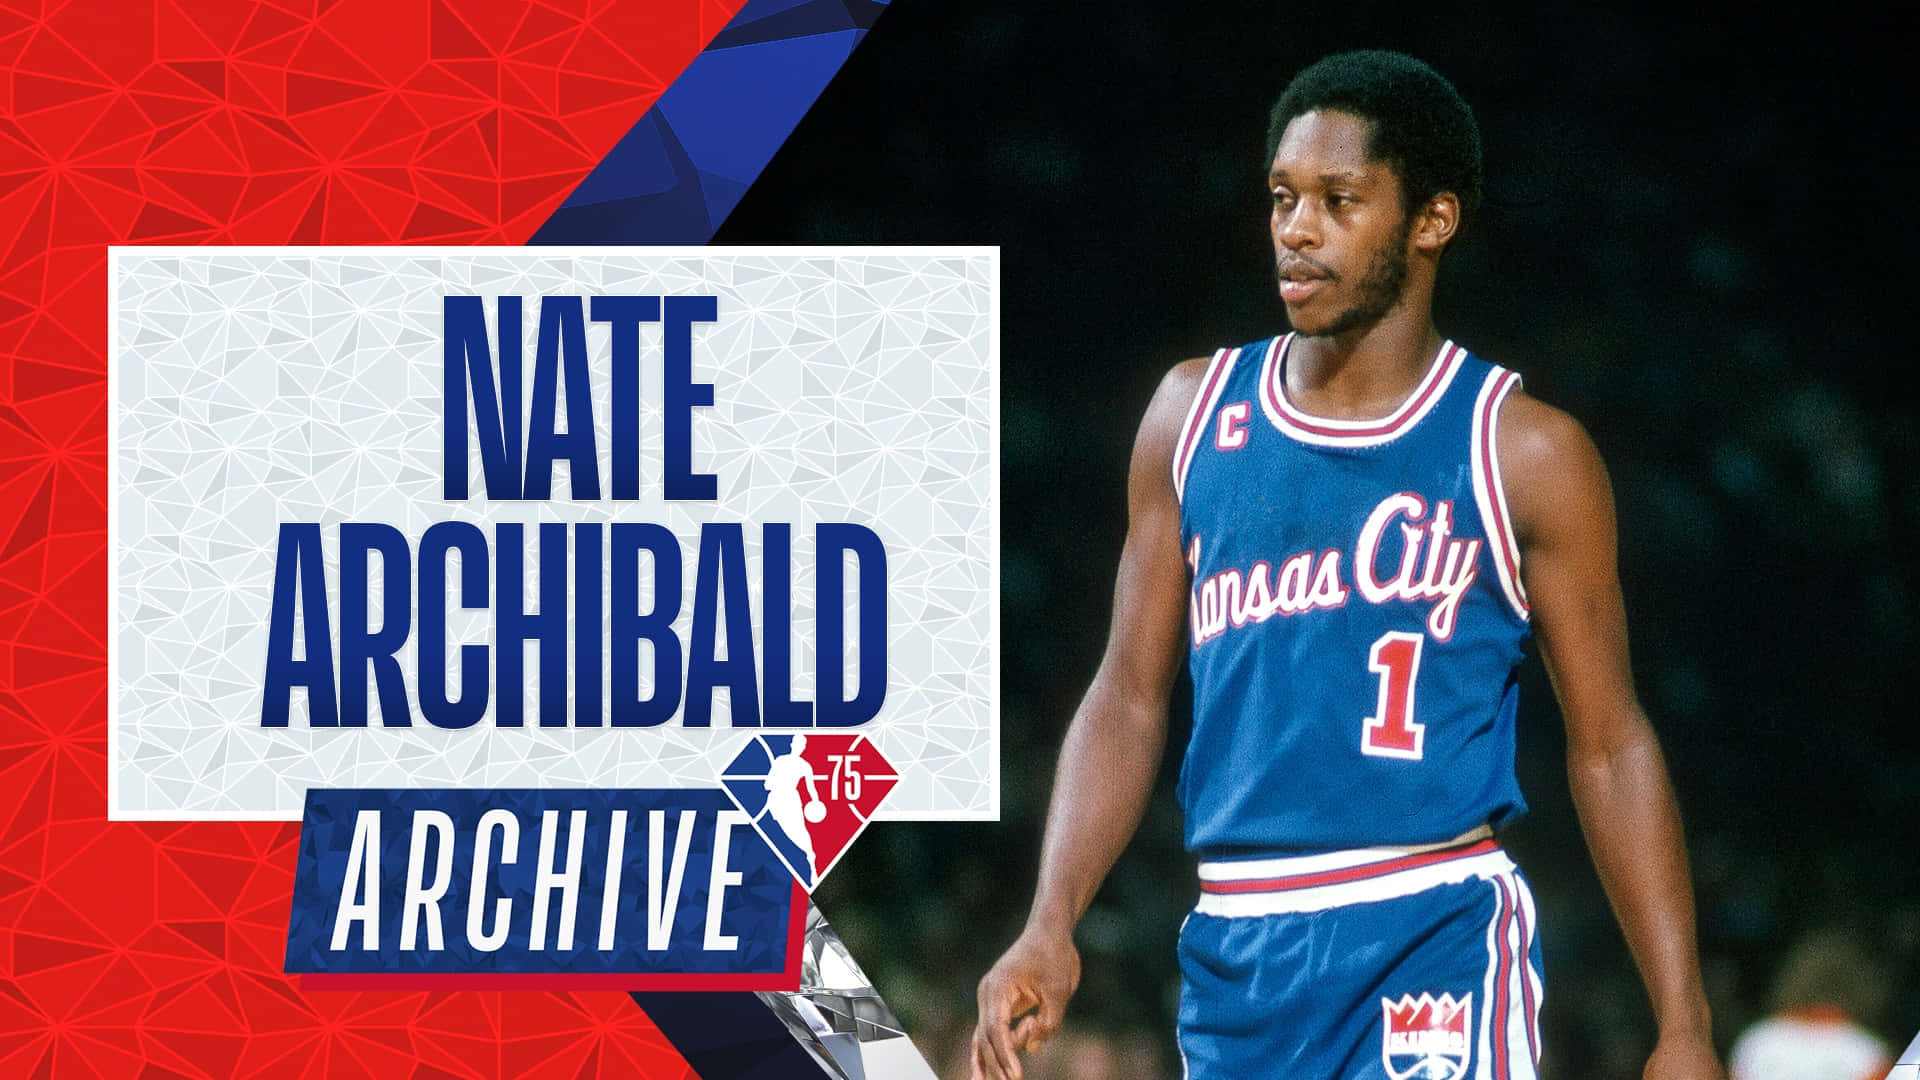 NBA Nate Archibald Arcive Poster Wallpaper